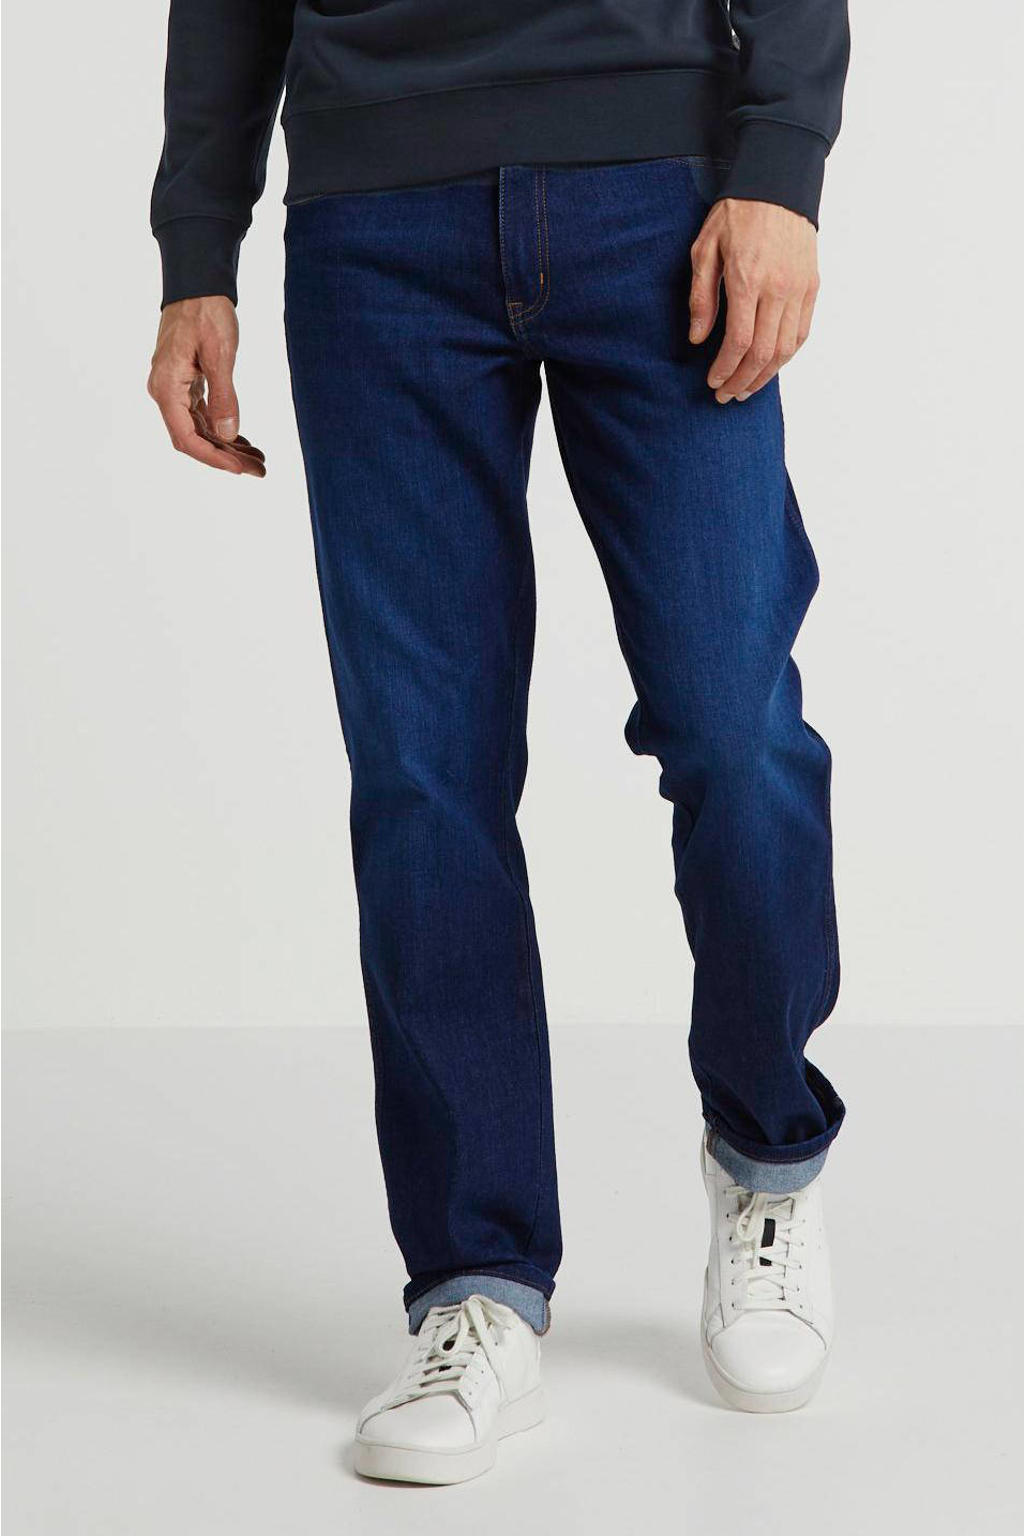 Wrangler regular fit jeans Texas comfort zone